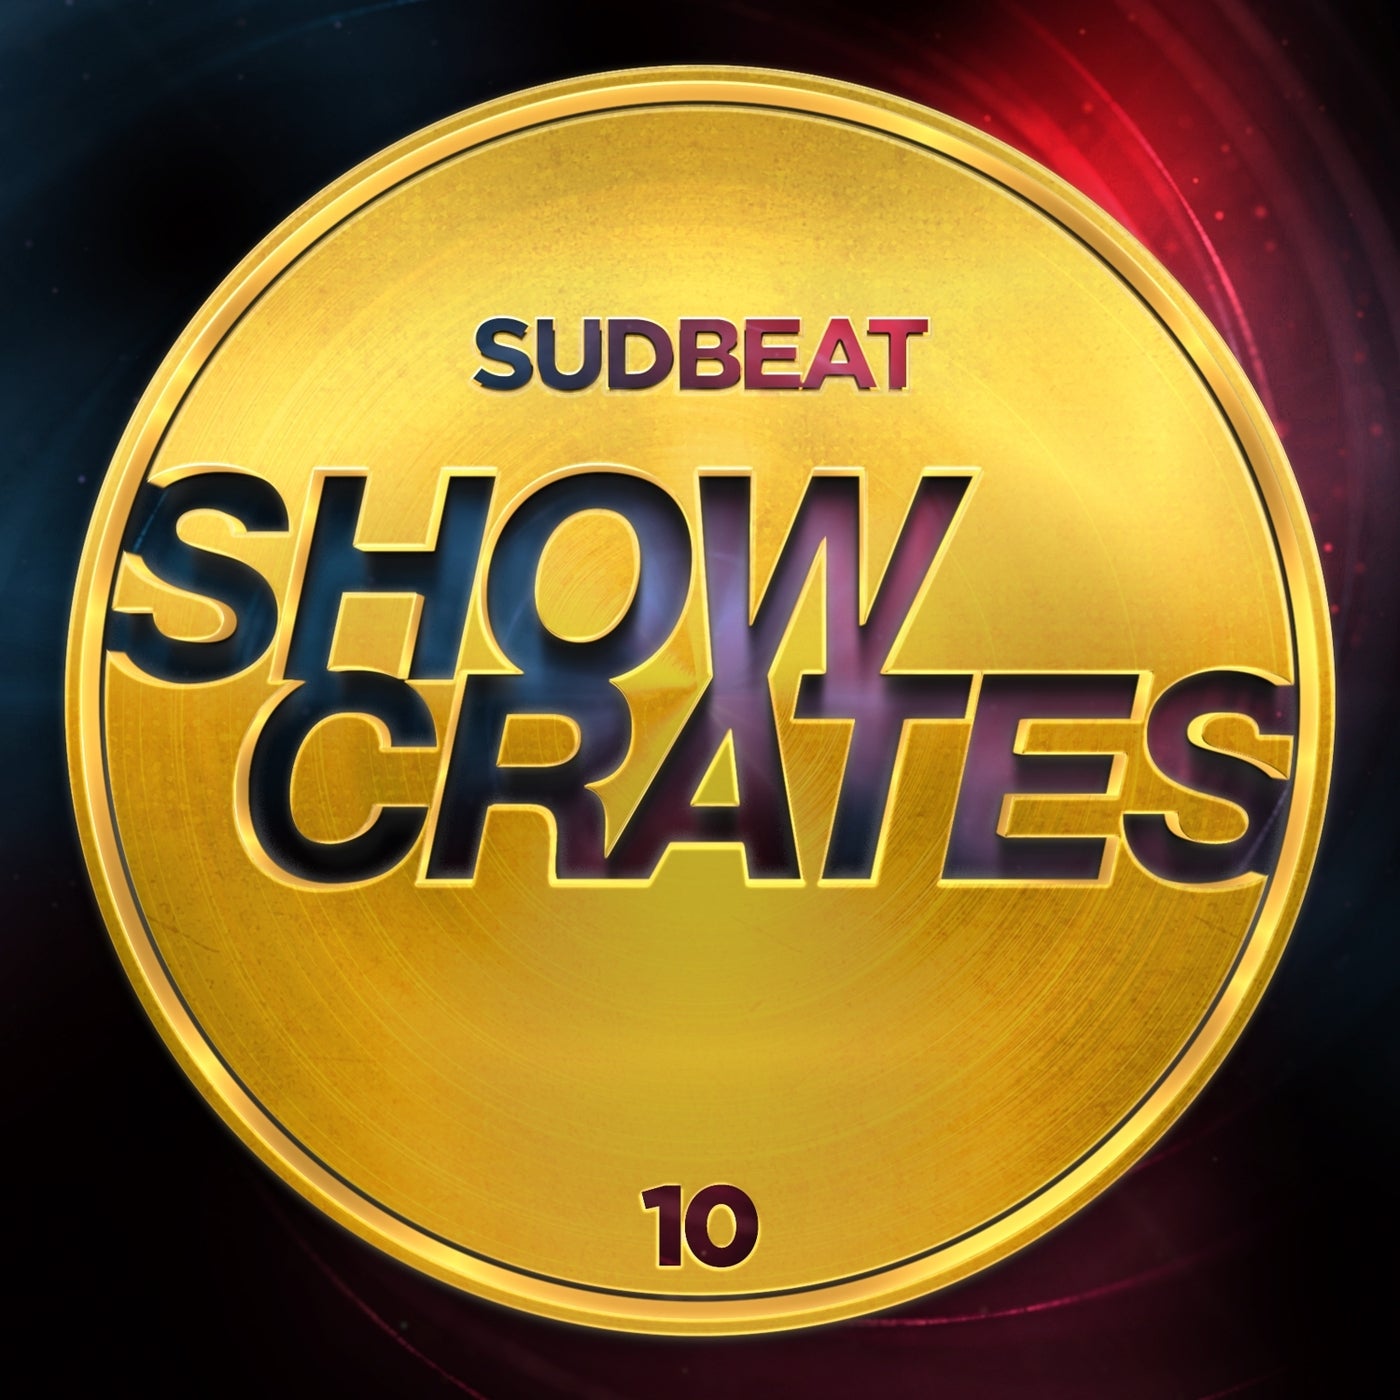 Download Sudbeat Showcrates 10 on Electrobuzz